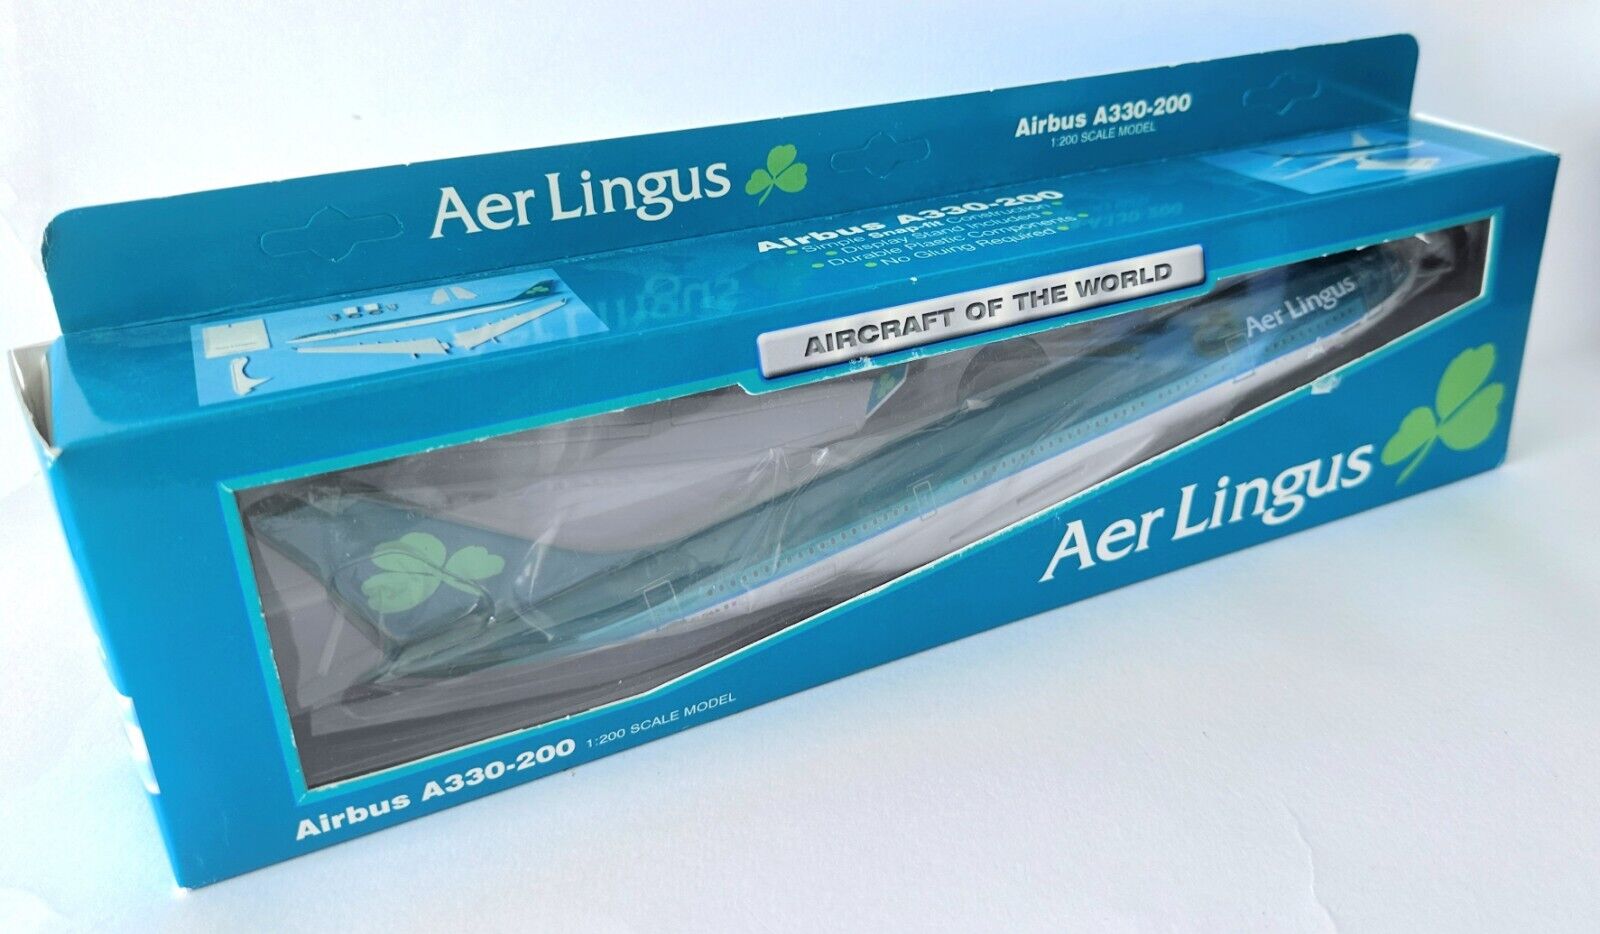 Airbus A330-200 Aer Lingus Ireland Premium Skymarks Collectors Model 1:200